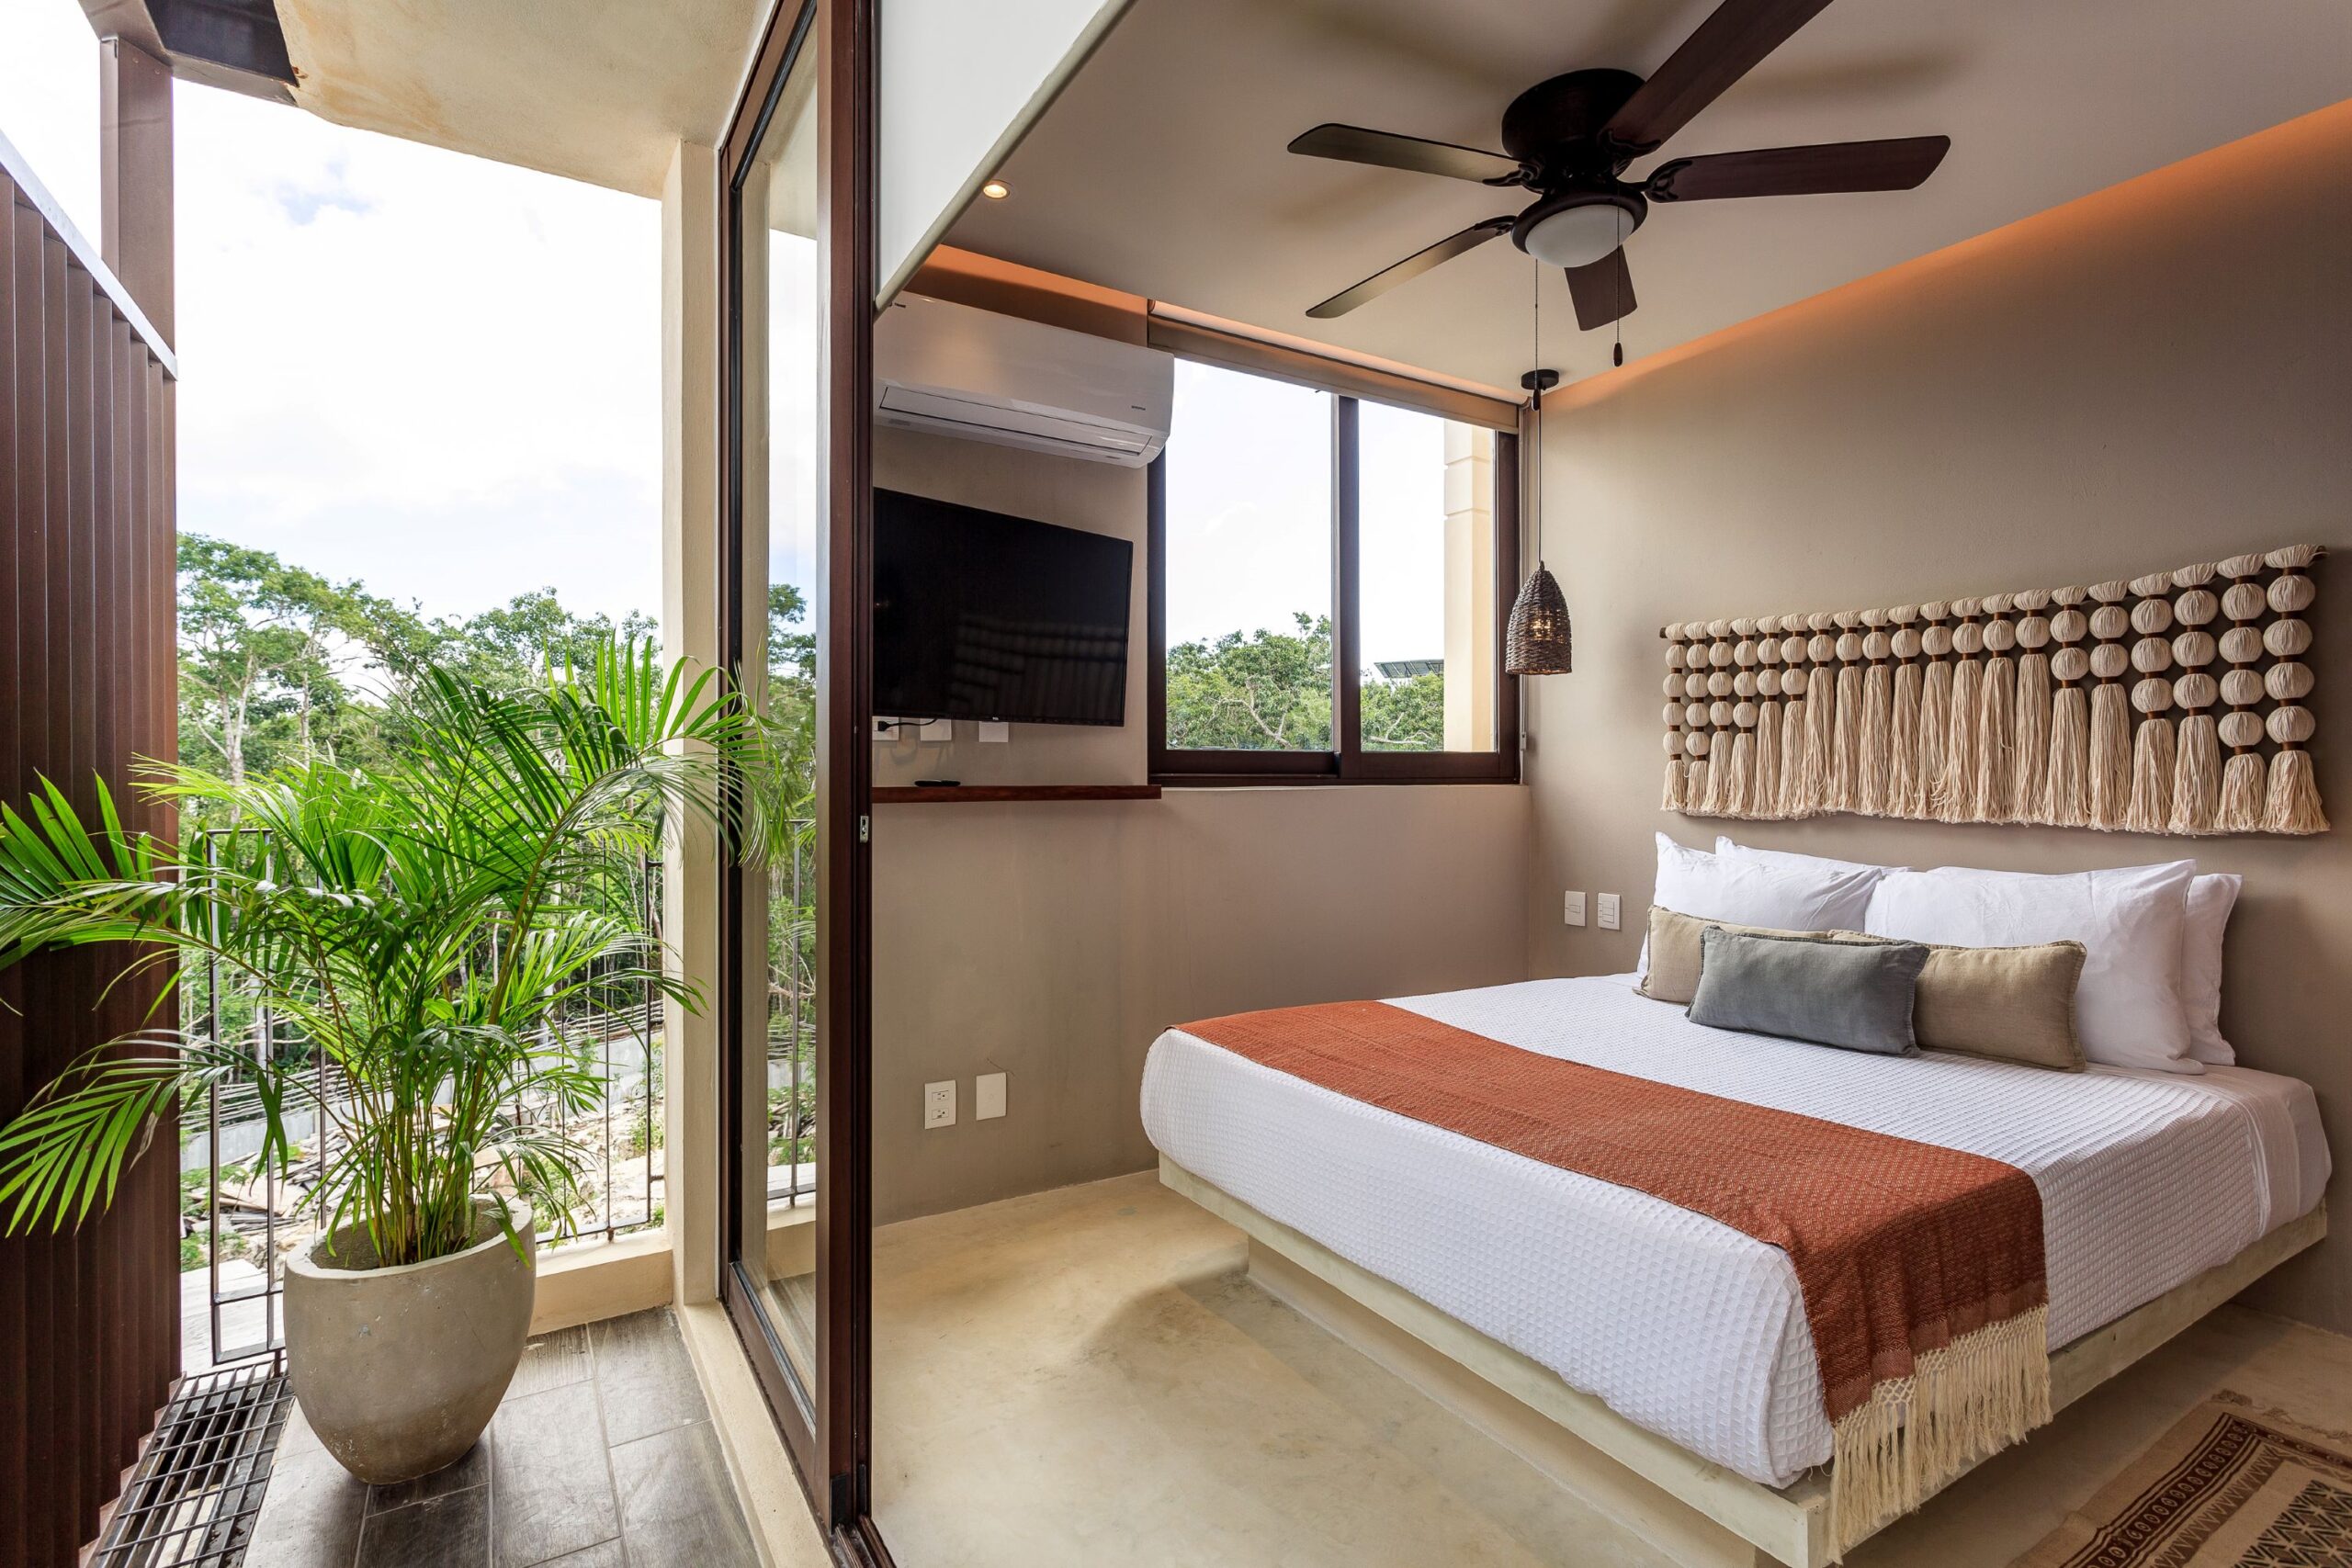 q real estate in tulum mexico villa alakin second bedroom terrace